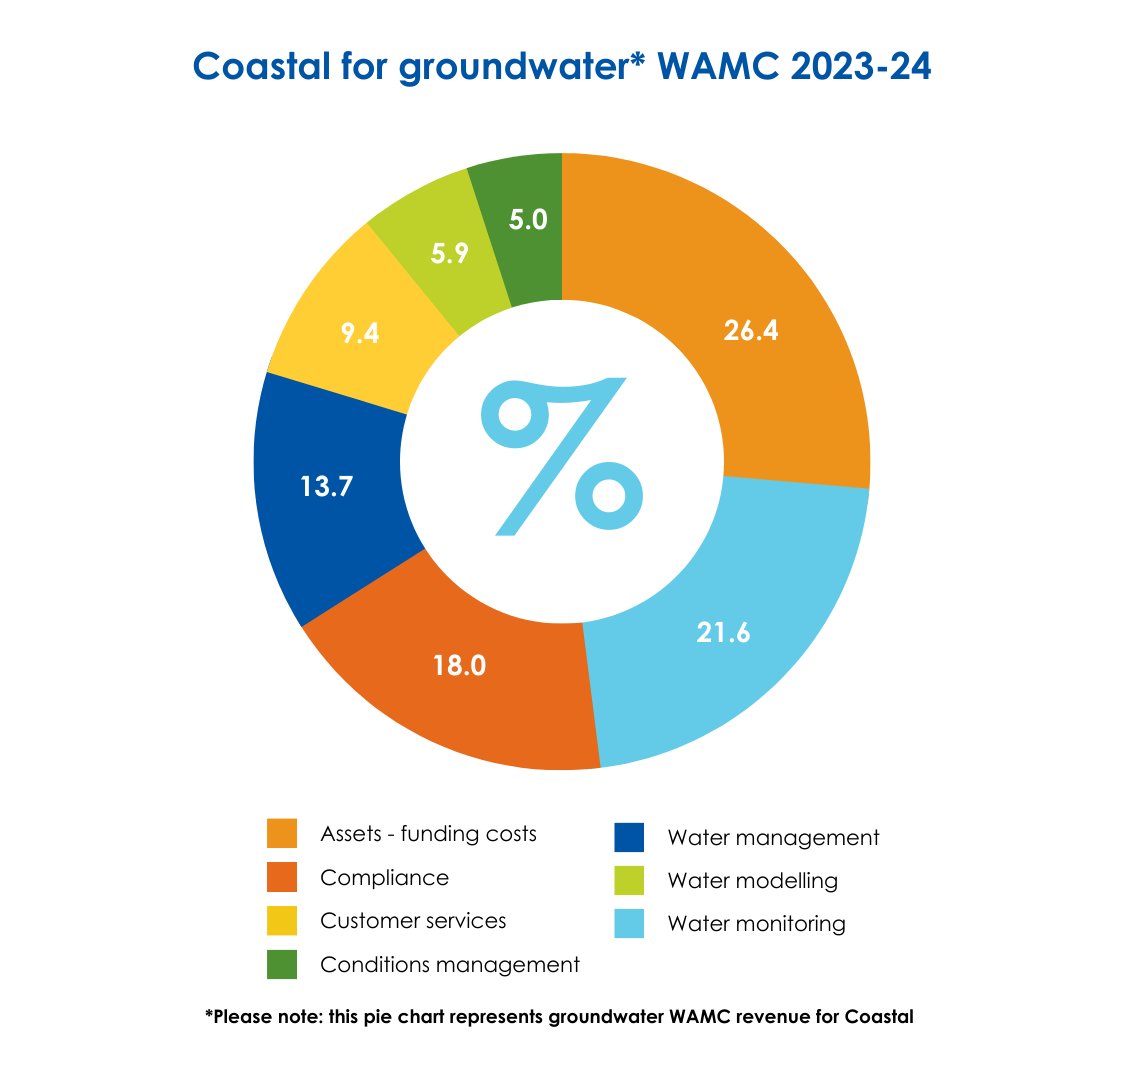 Coastal for groundwater WAMC revenue 23-24 piechart